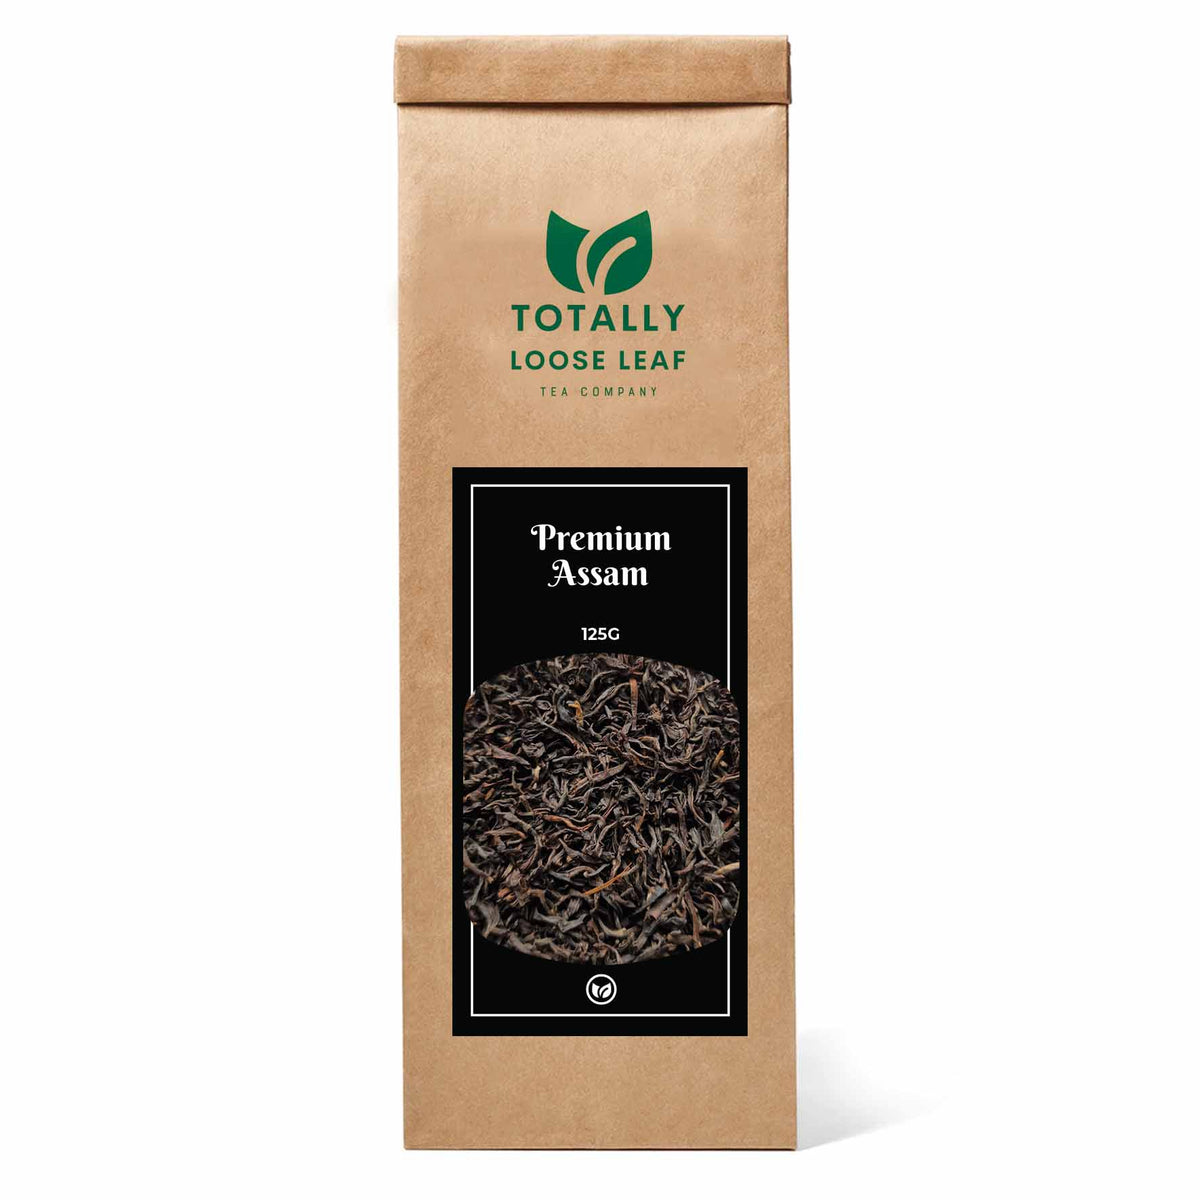 Premium Assam Black Estate Loose Leaf Tea - one pouch